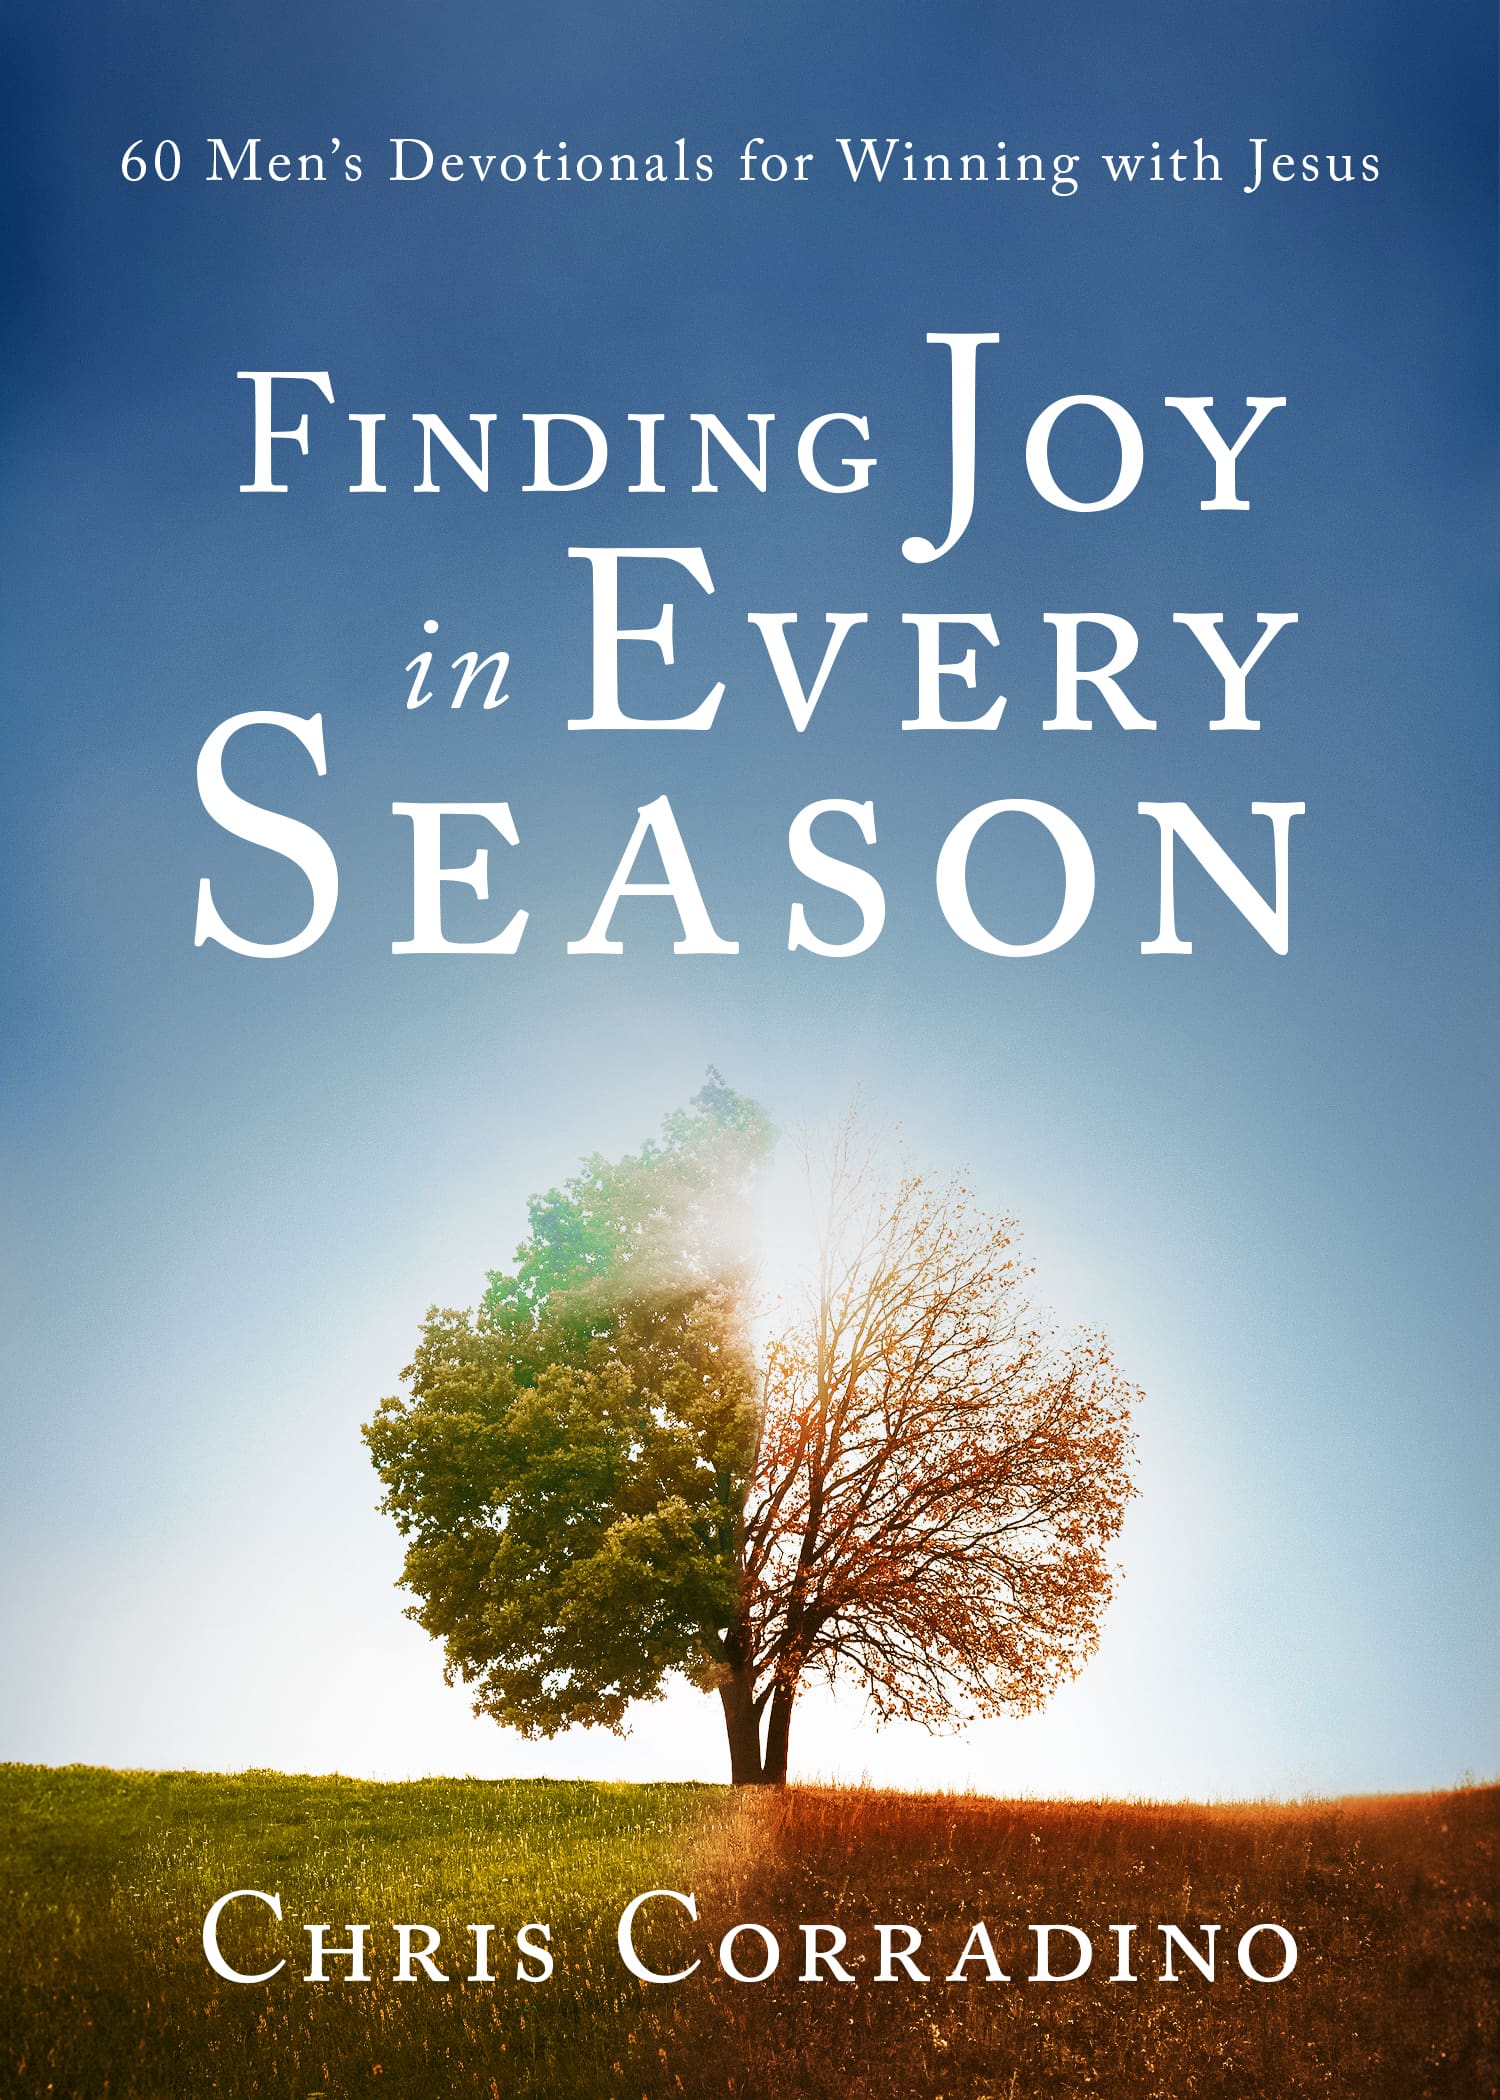 Finding Joy in Every Season by Chris Corradino - Ambassador International